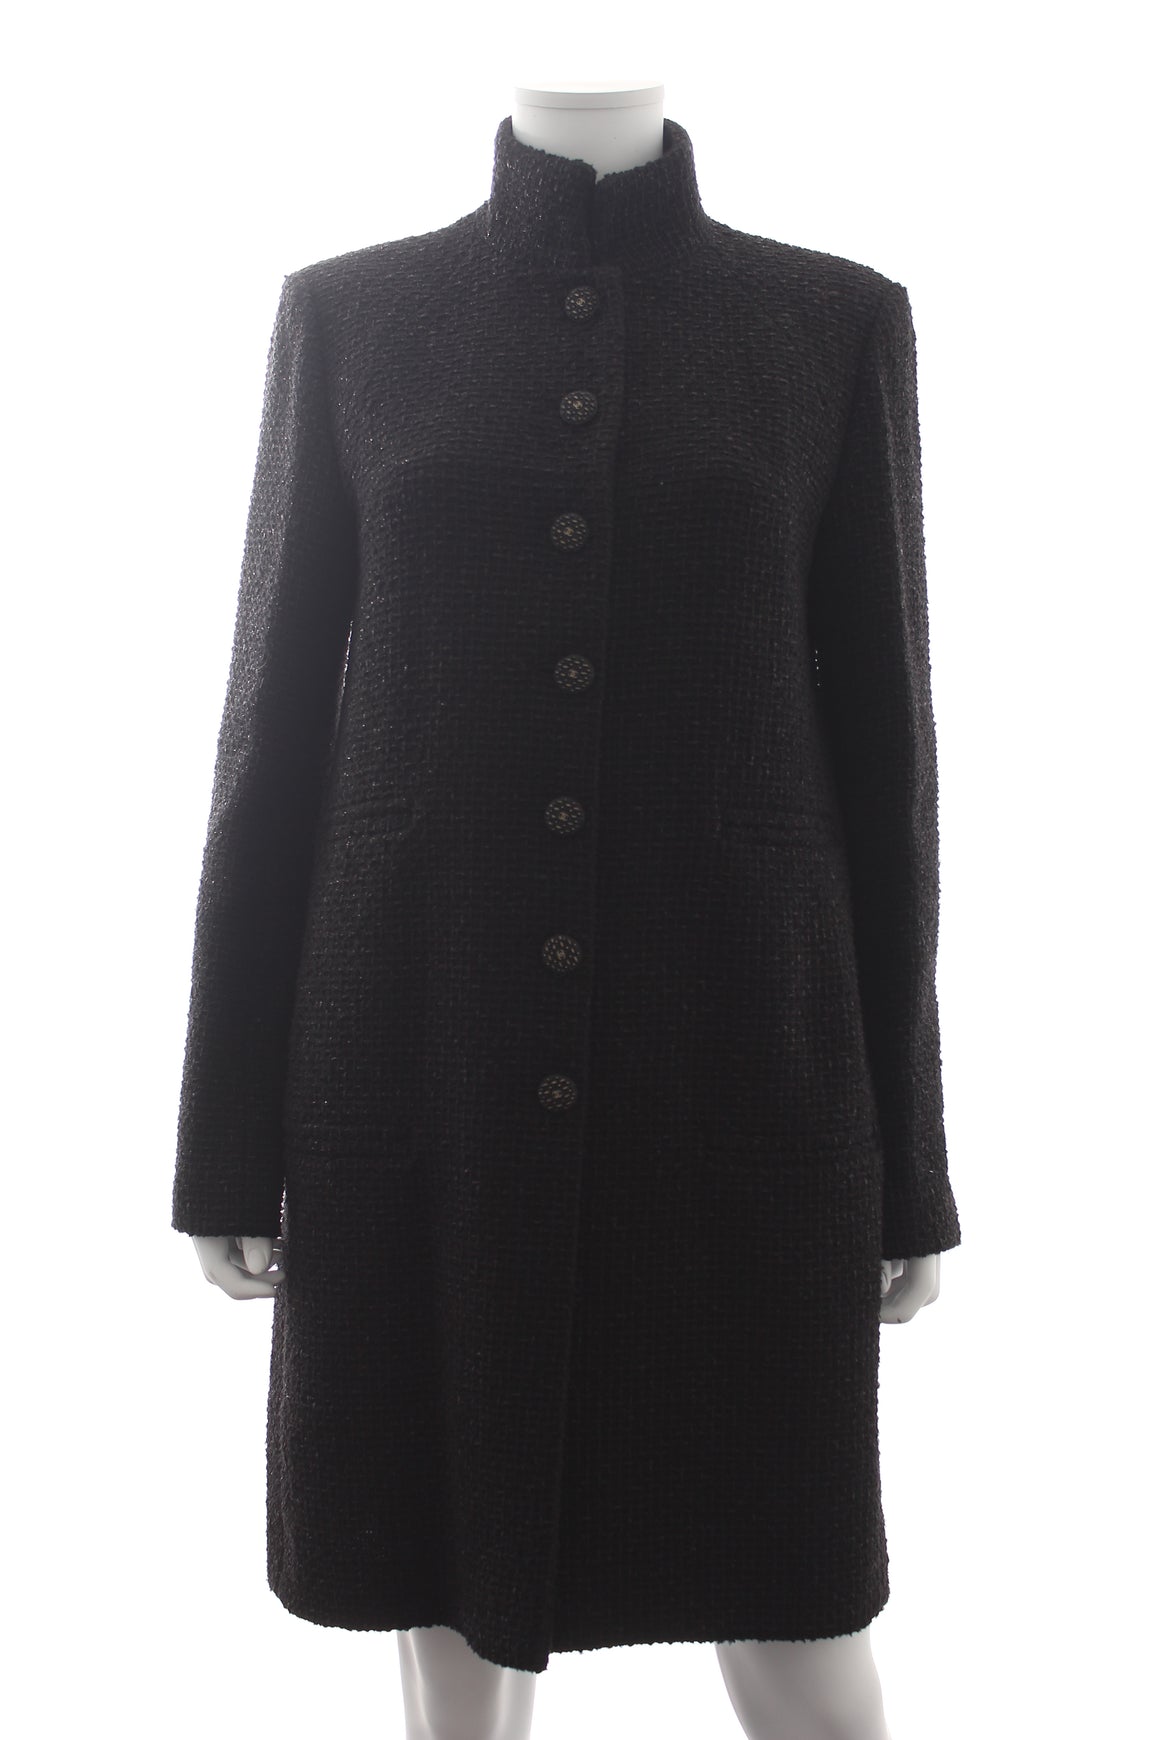 Chanel Cotton-Blend Tweed Coat